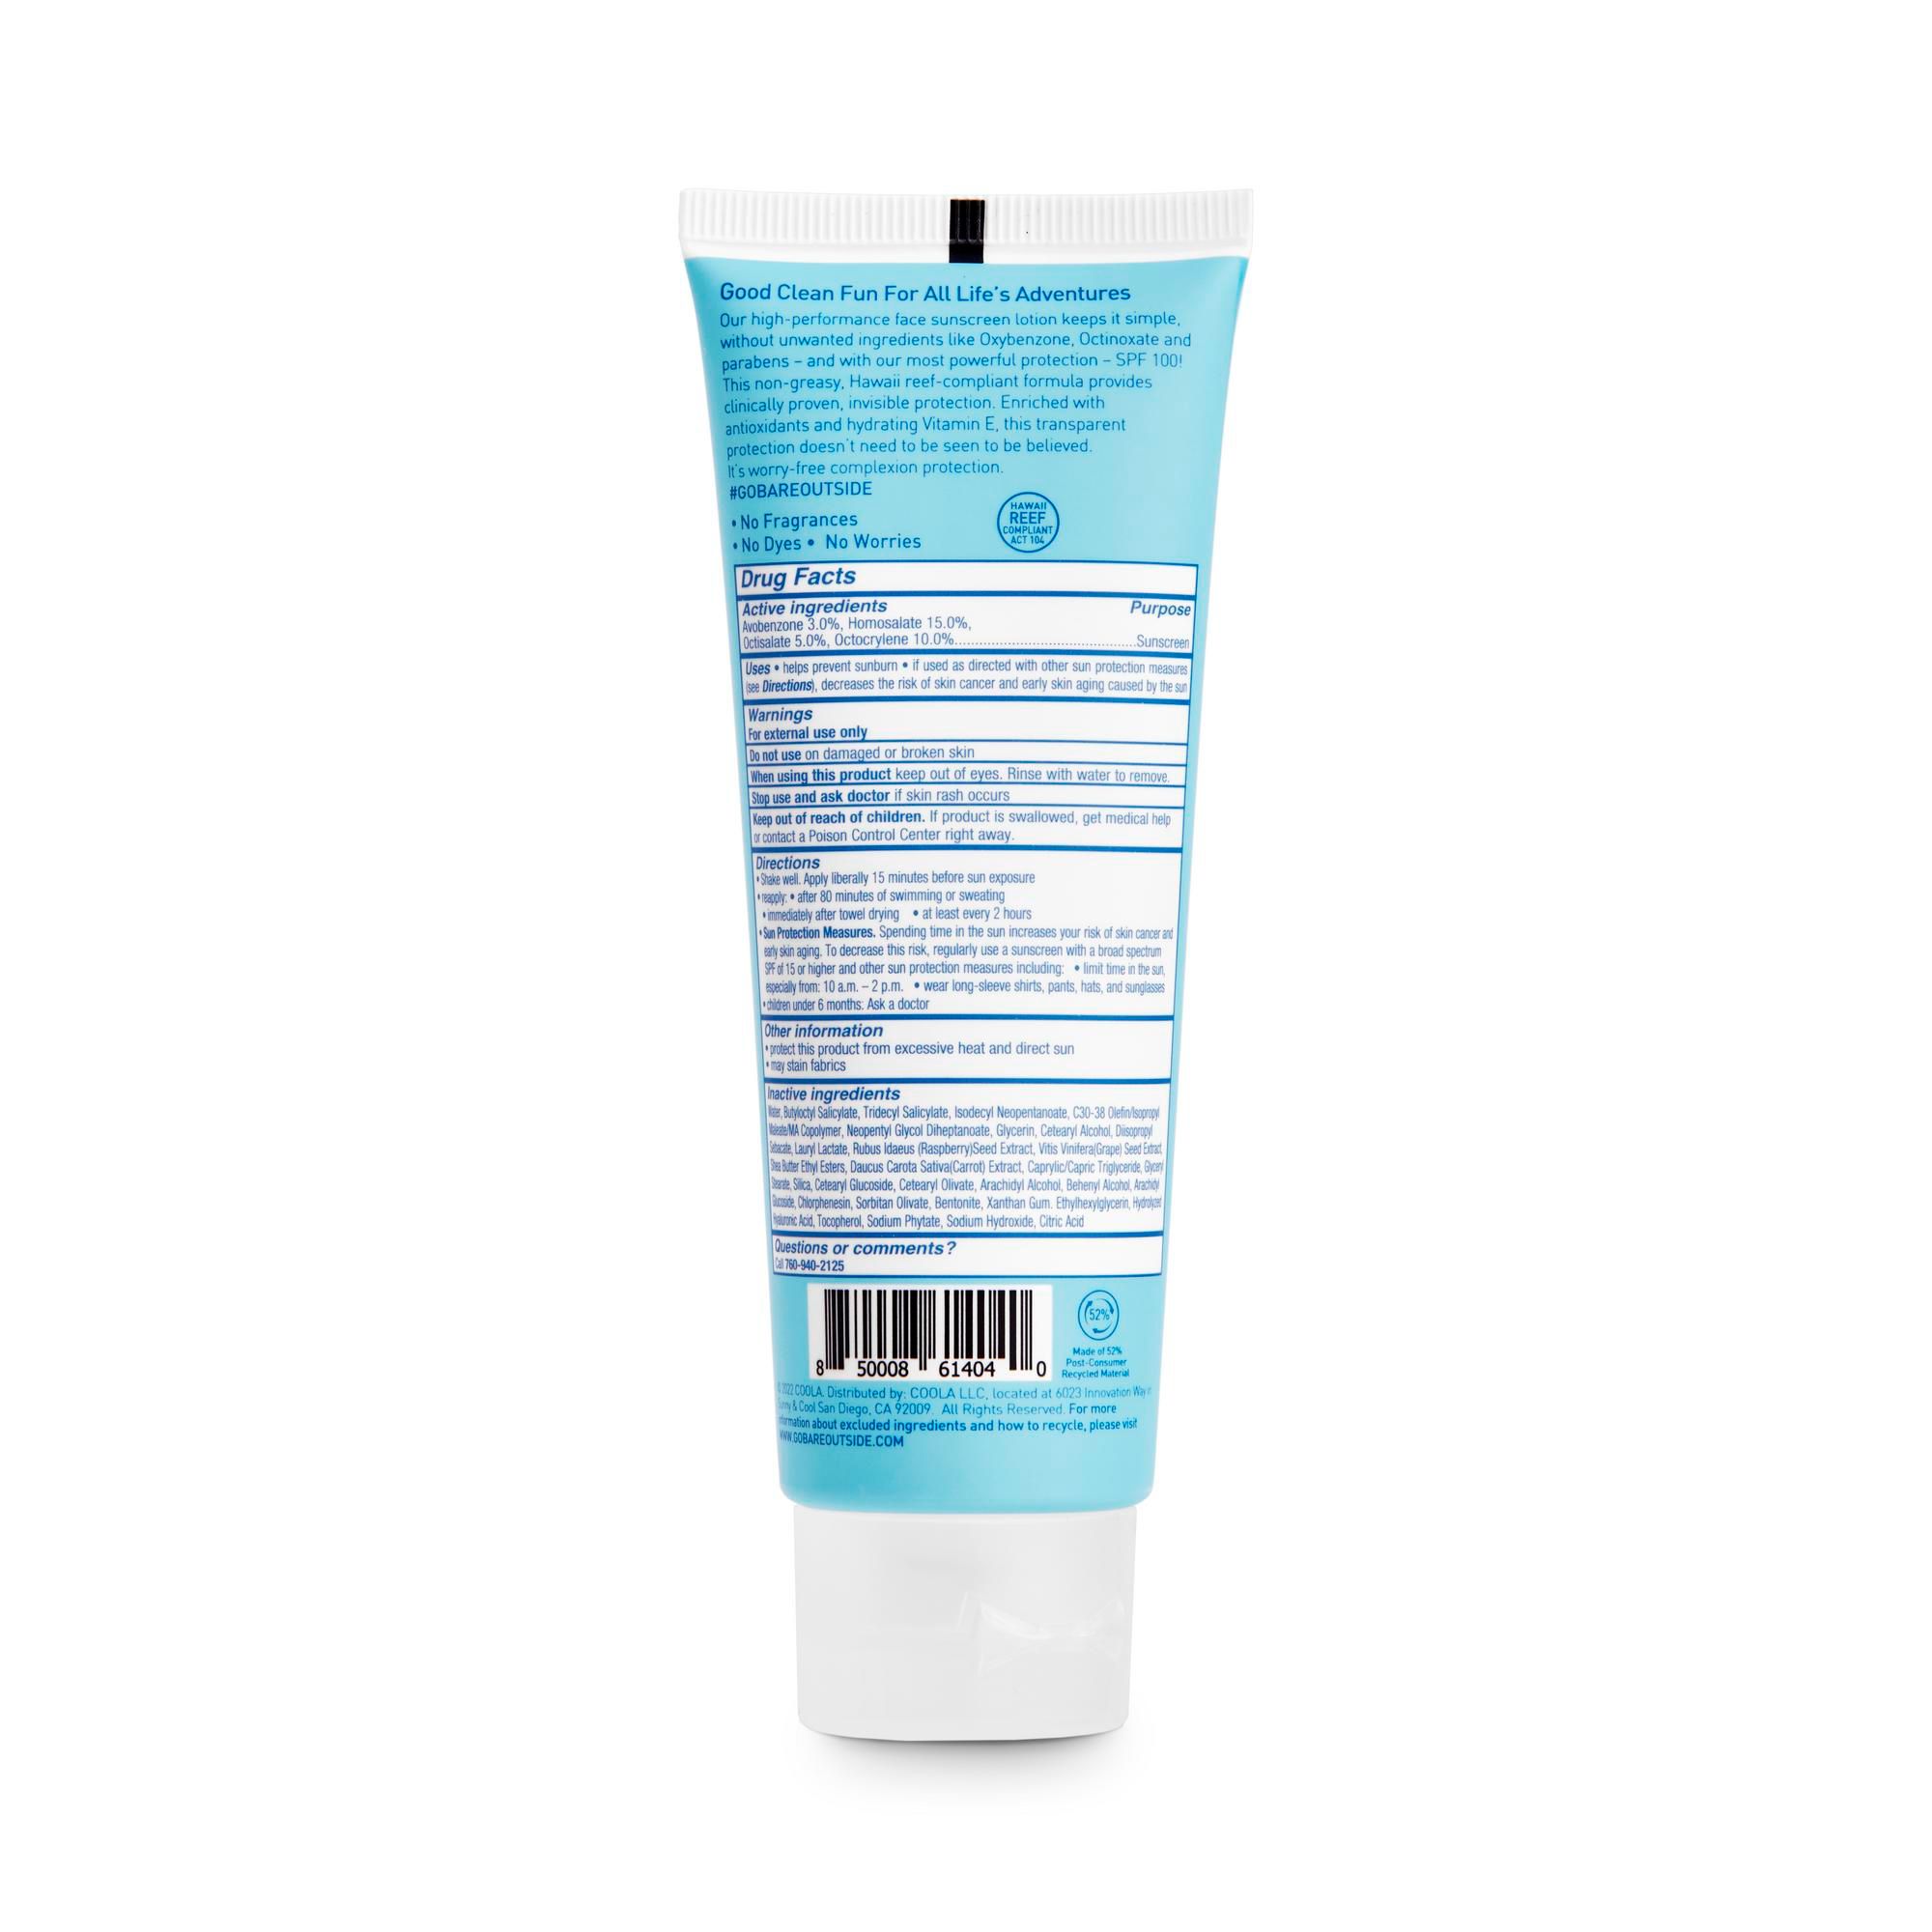 Bare Republic Clearscreen Sunscreen Face Lotion, SPF 100 - 2 fl oz